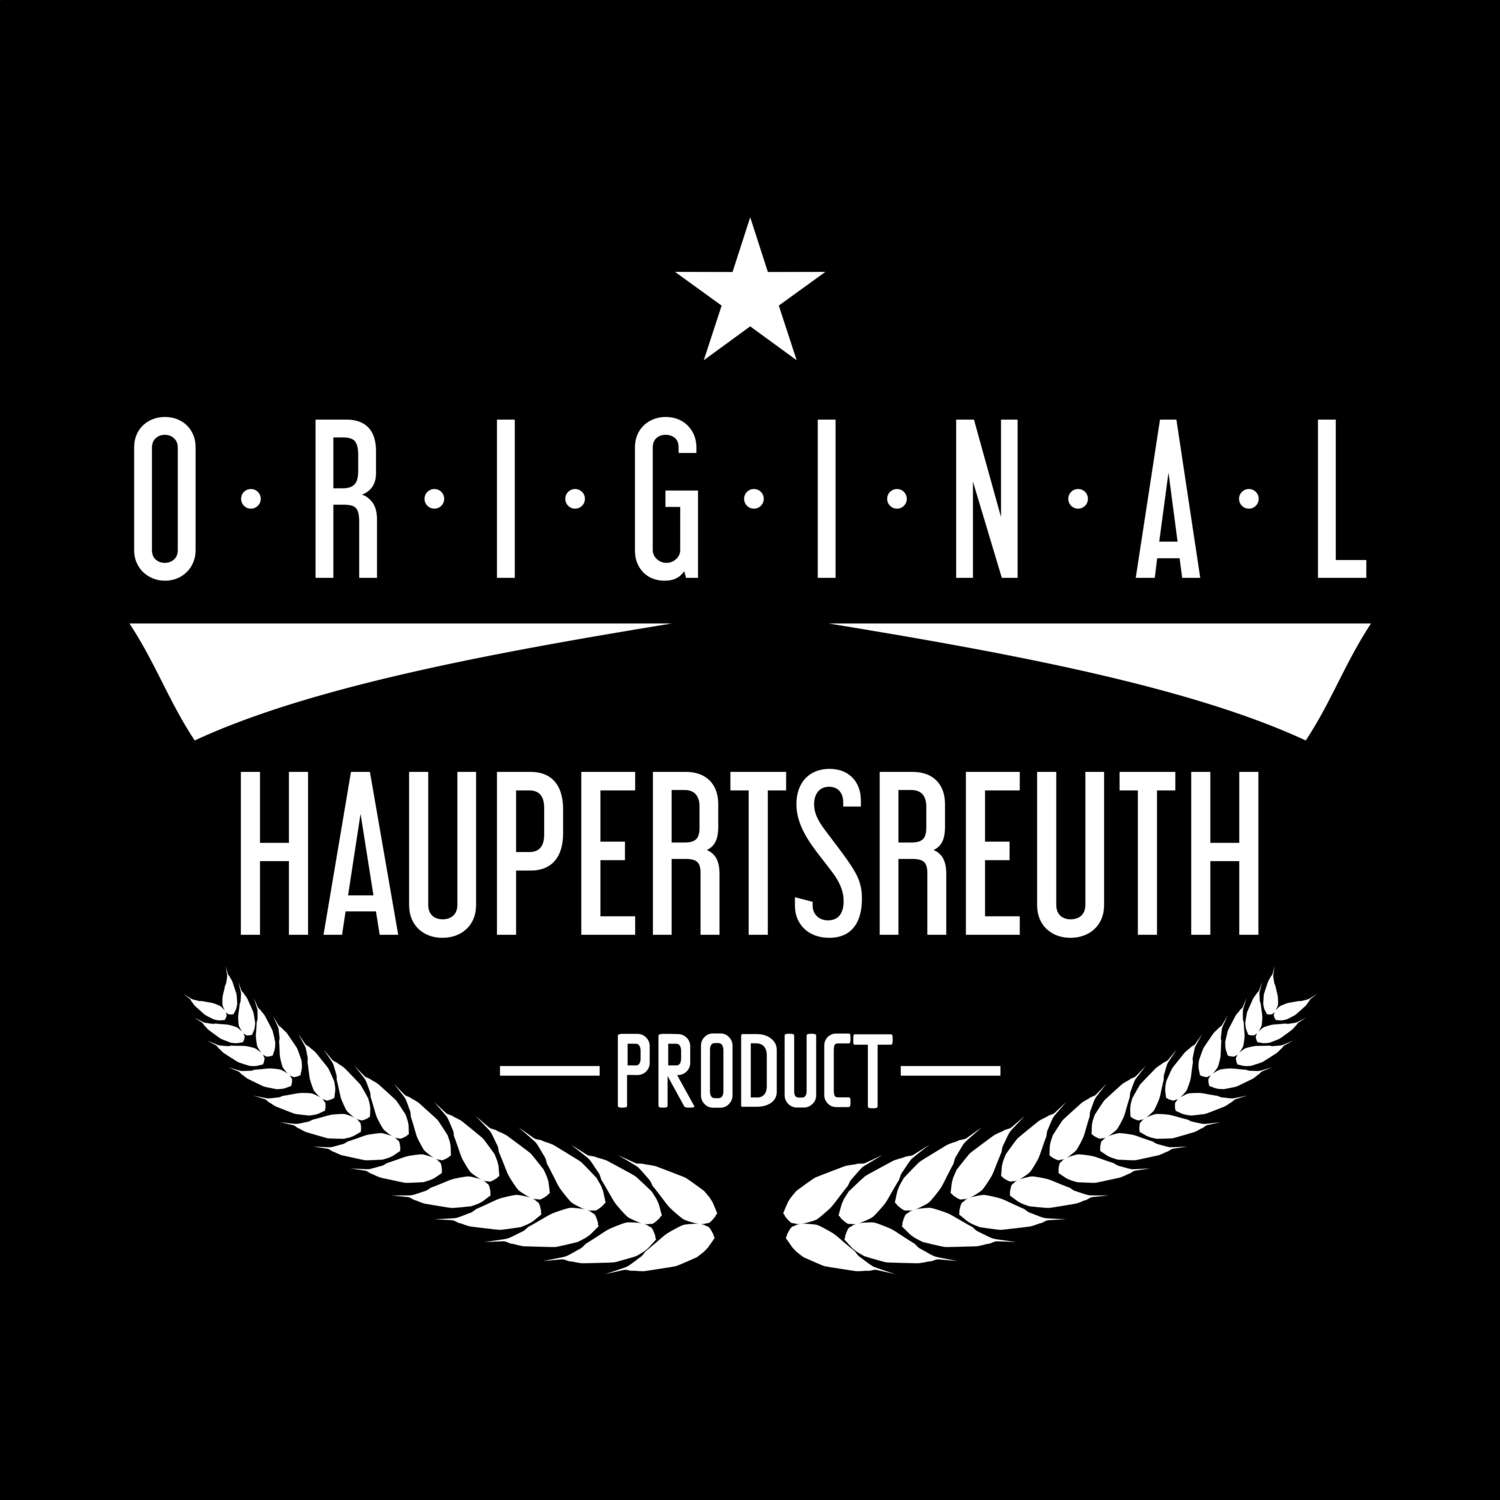 Haupertsreuth T-Shirt »Original Product«